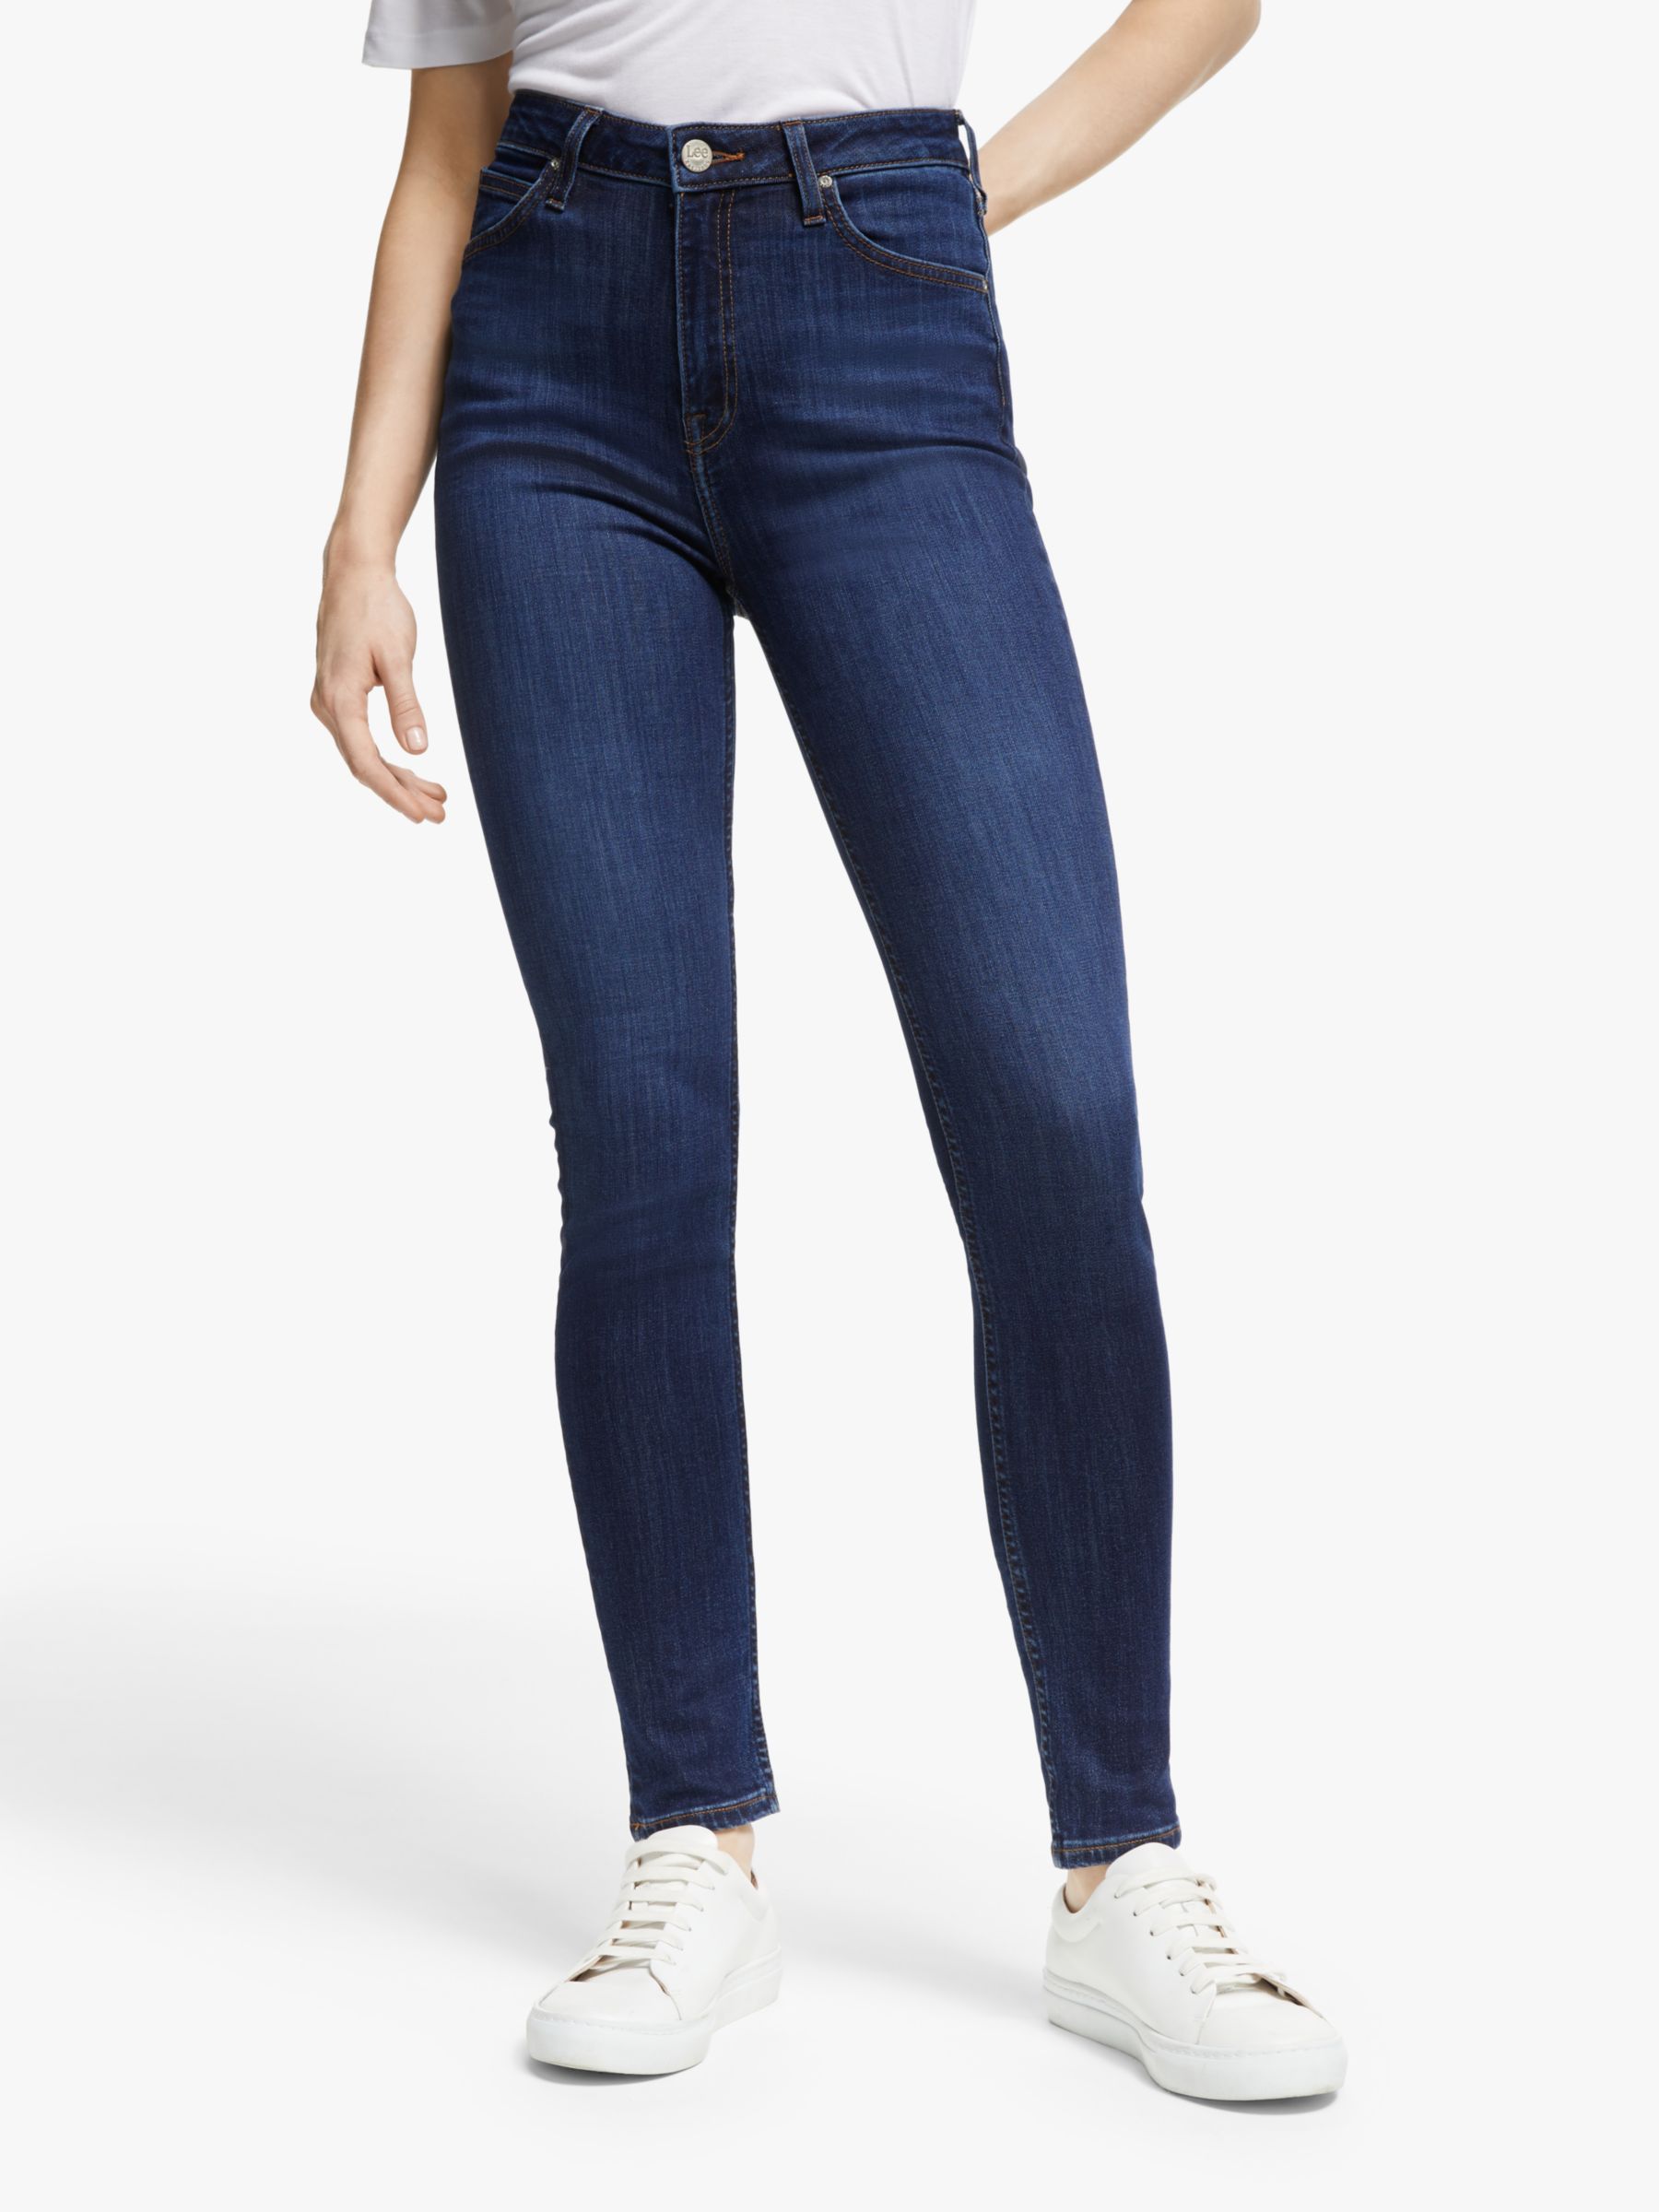 lee jeans super skinny